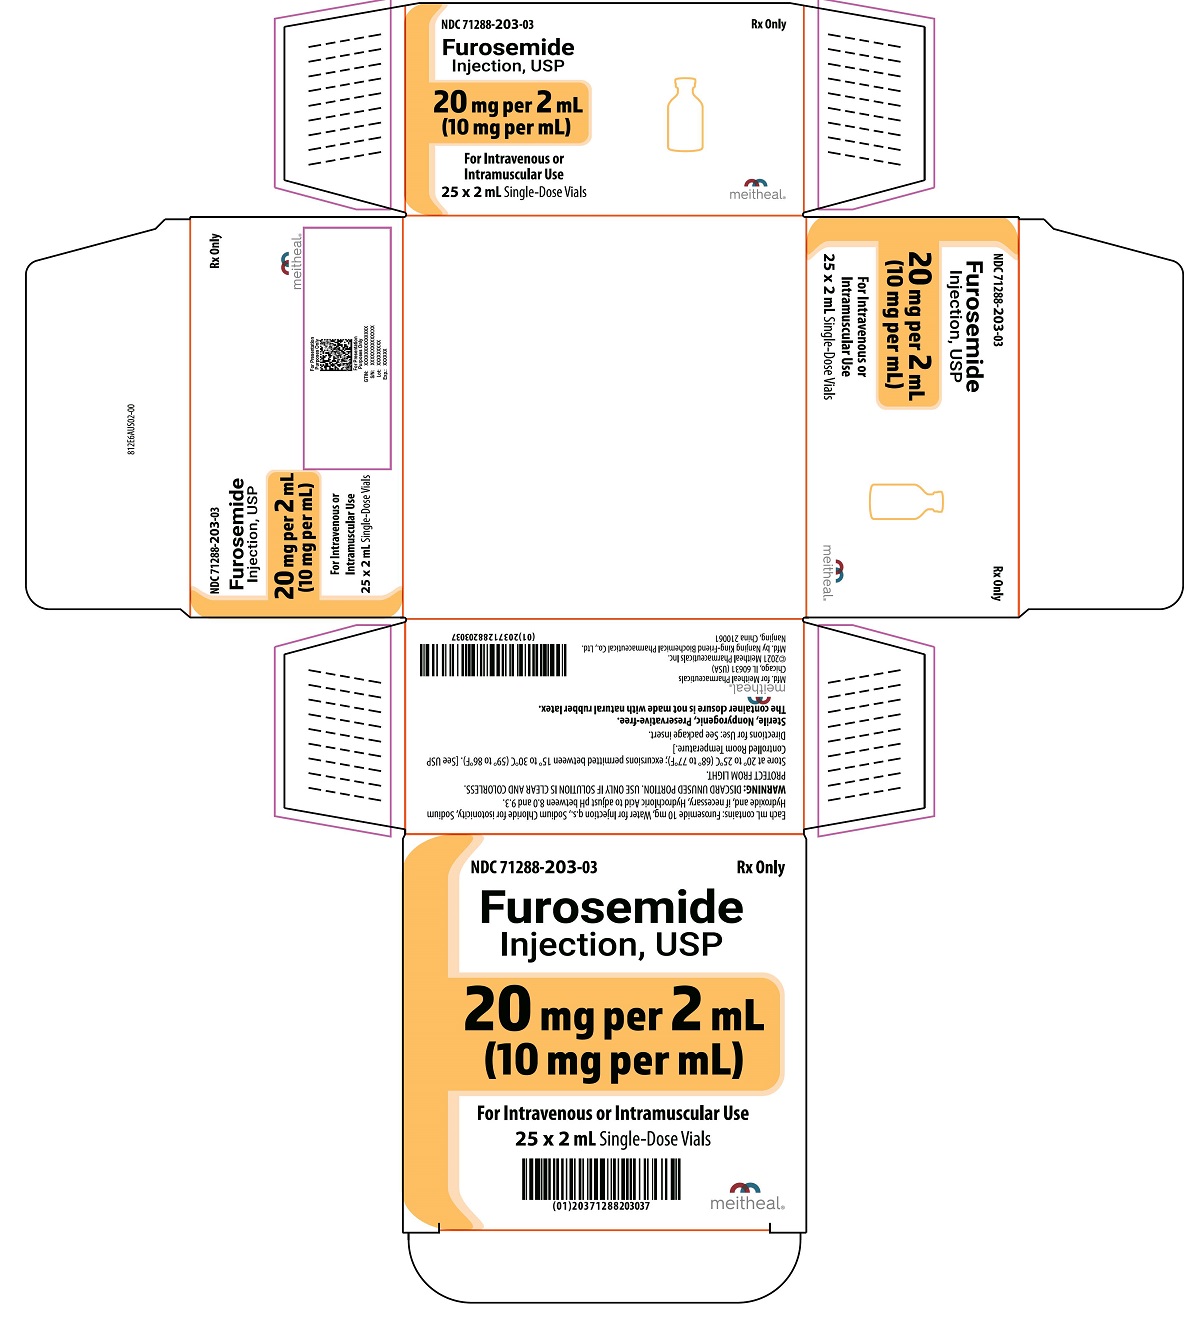 PRINCIPAL DISPLAY PANEL – Furosemide Injection, USP 20 mg per 2 mL Carton